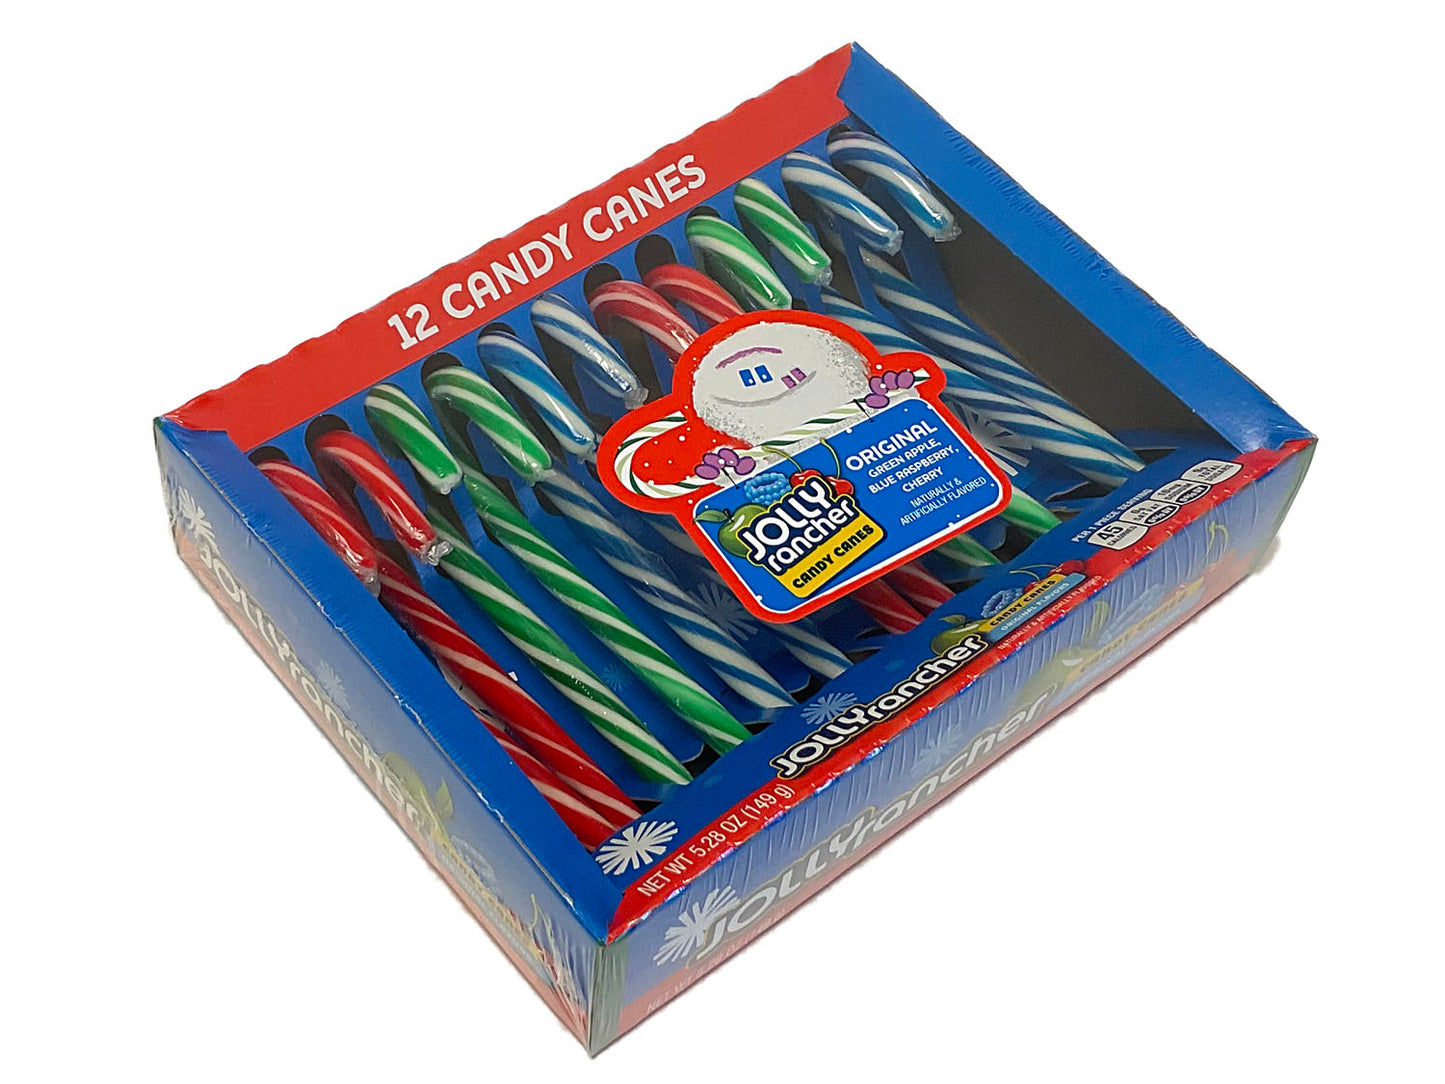 Candy Canes - Jolly Rancher - 5.28 oz box